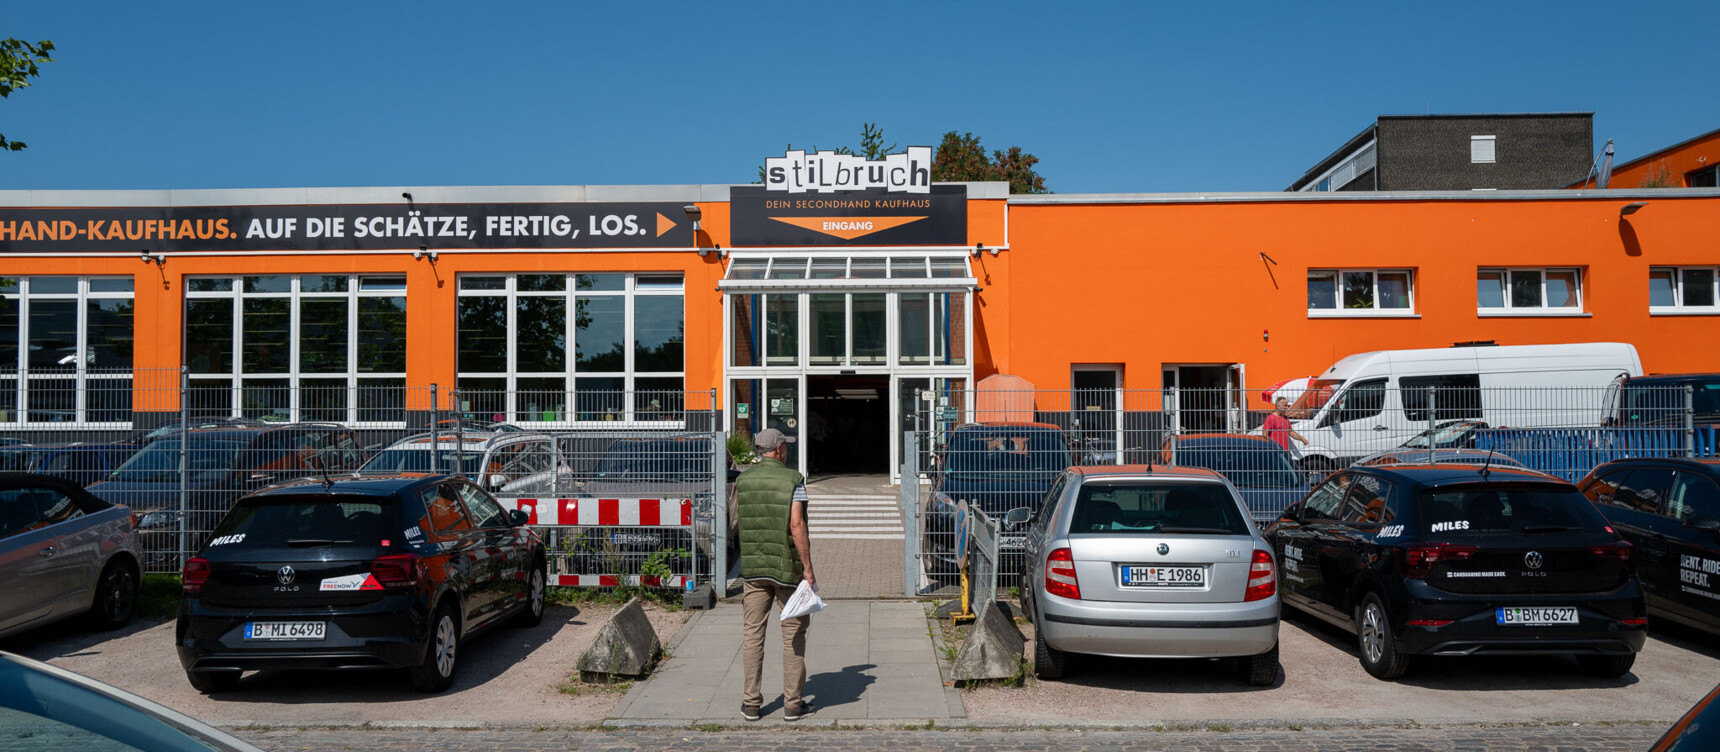 Second-hand store Stilbruch at the location Friedrich-Ebert-Damm